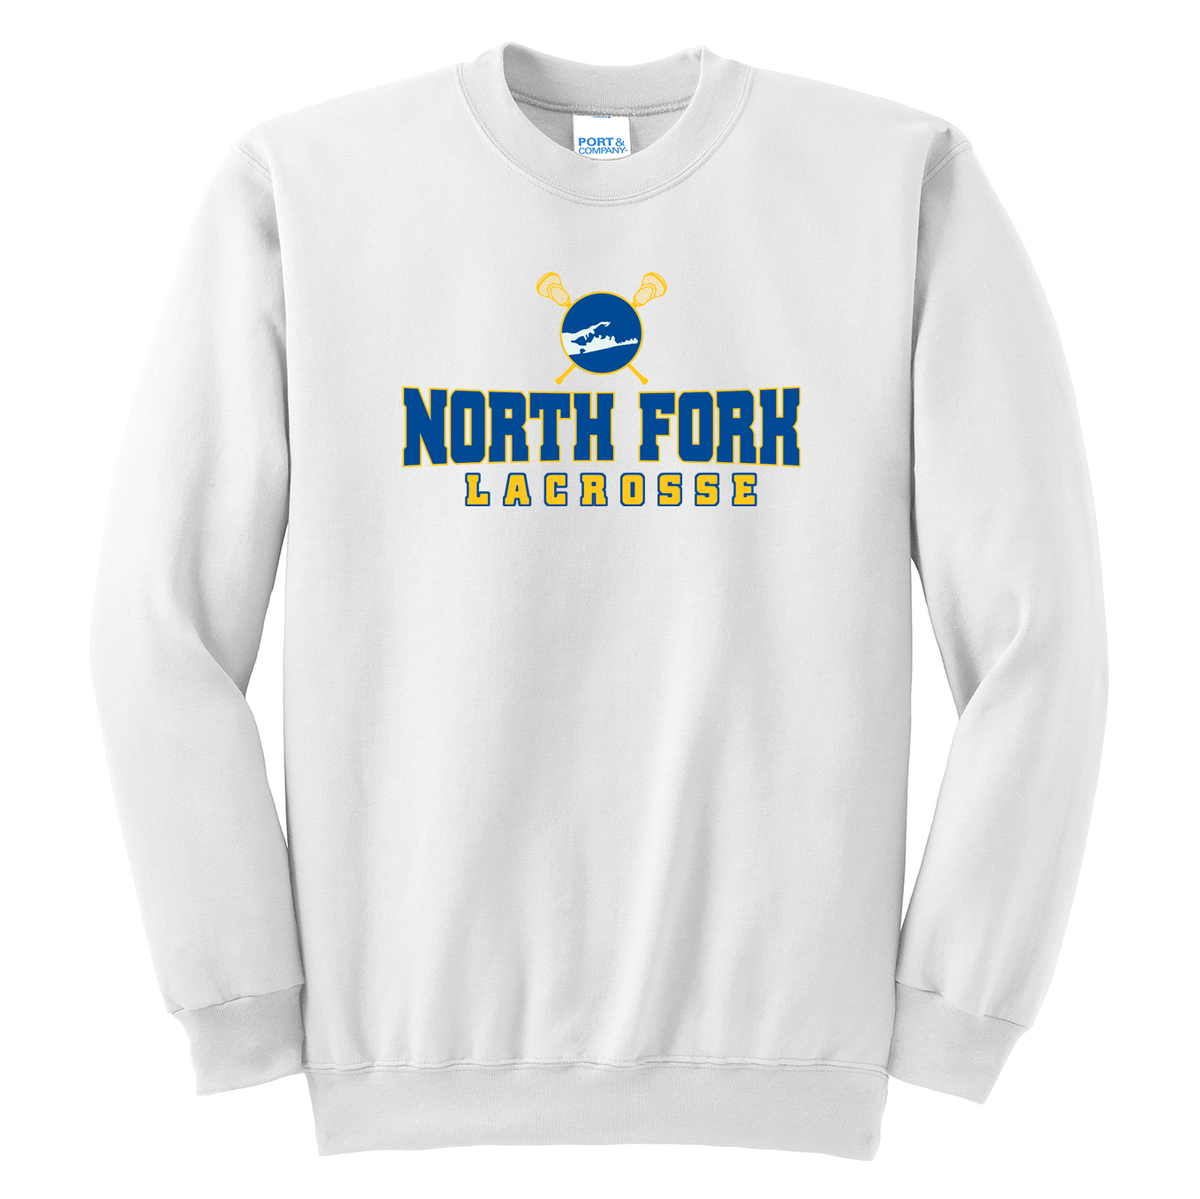 North Fork Lacrosse Crew Neck Sweater